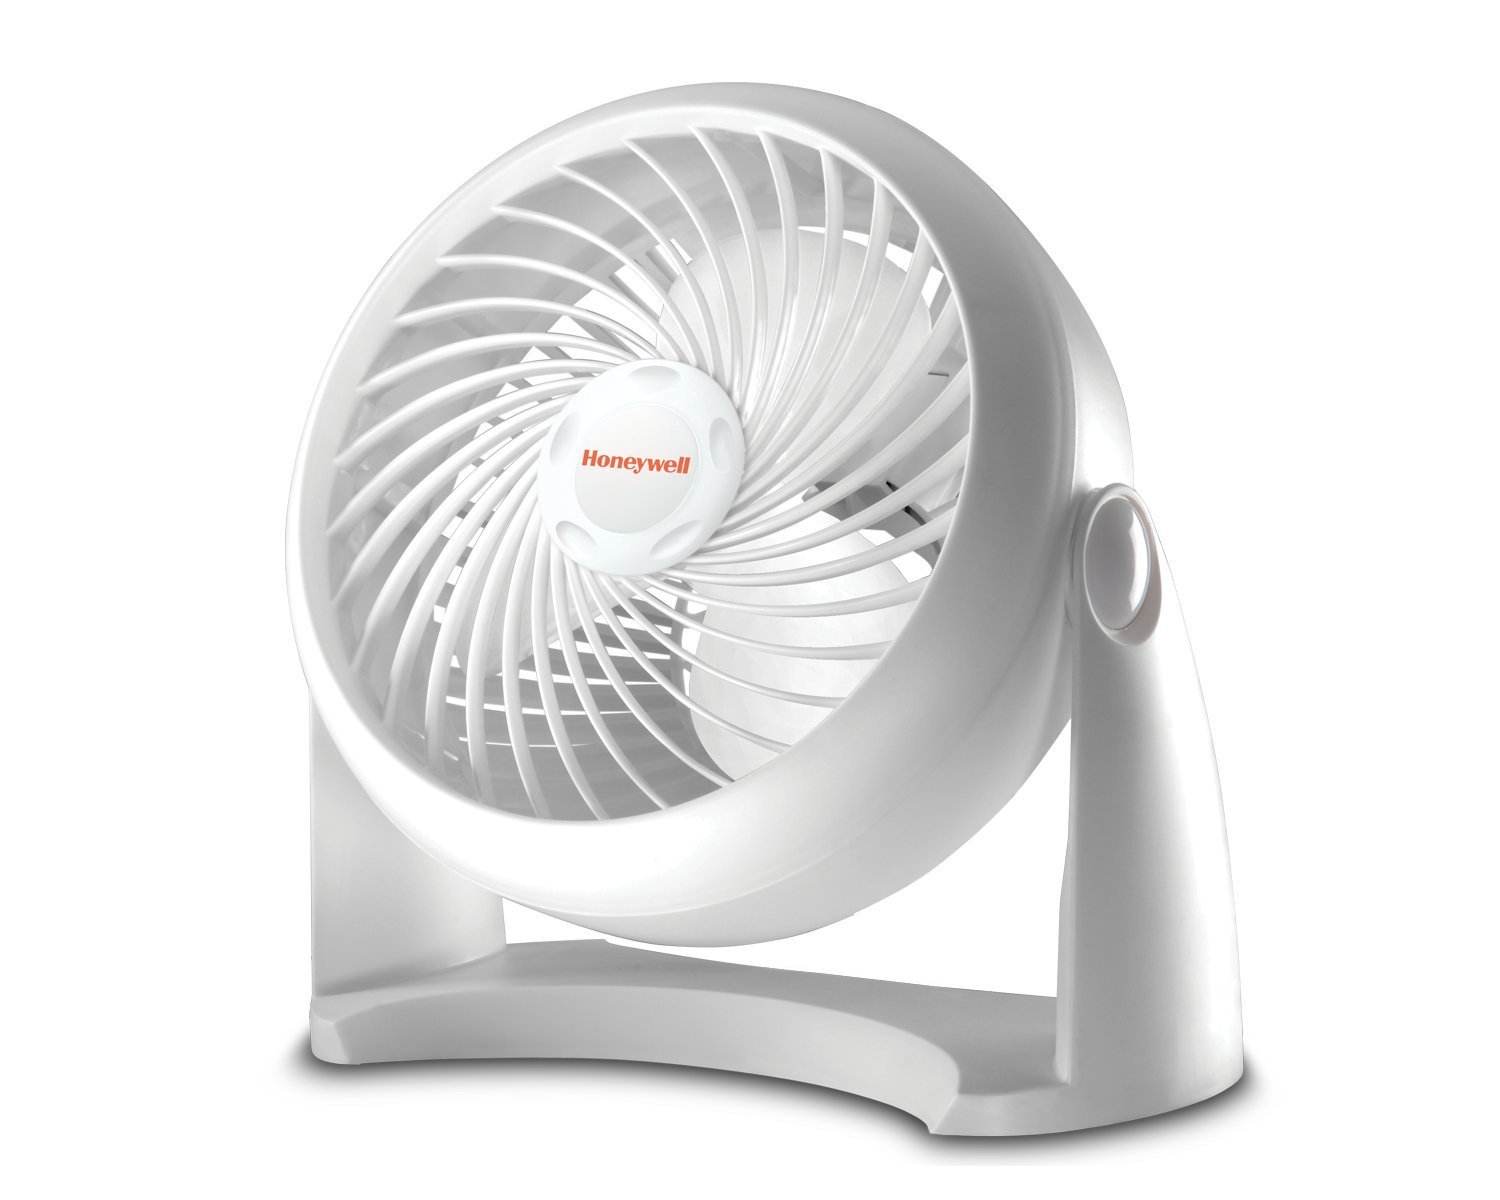 Honeywell Tabletop Air-Circulator Fan in White – Just $13.39!